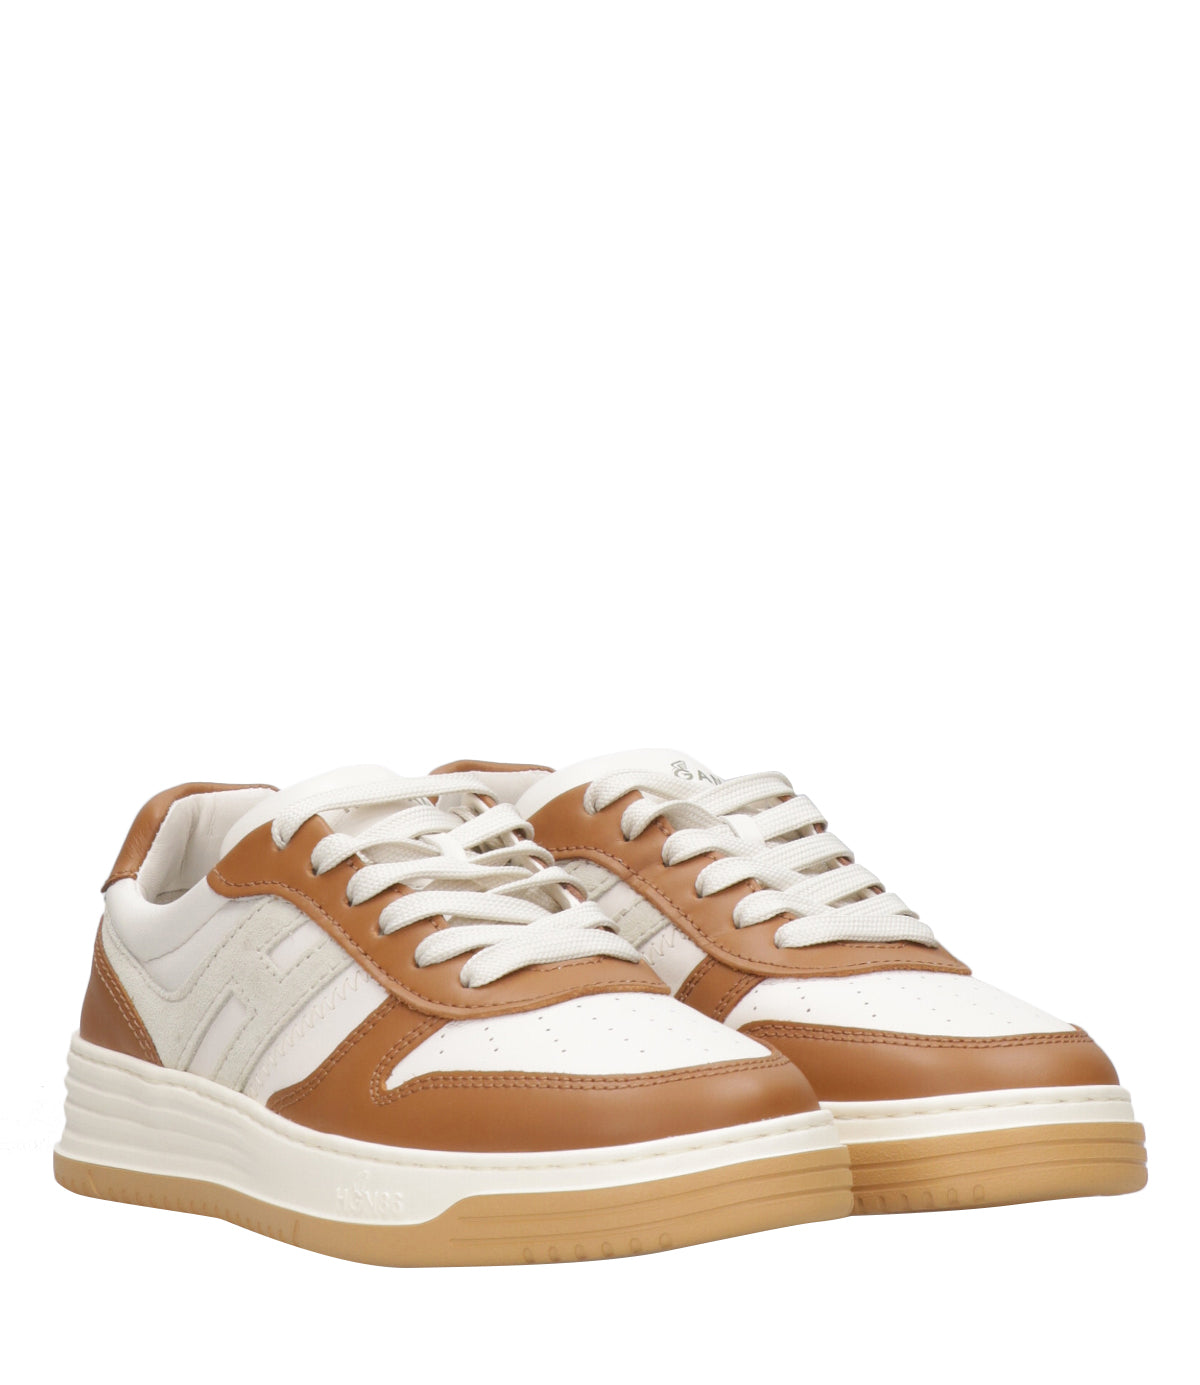 Hogan | Sneakers H630 Bianco e Marrone